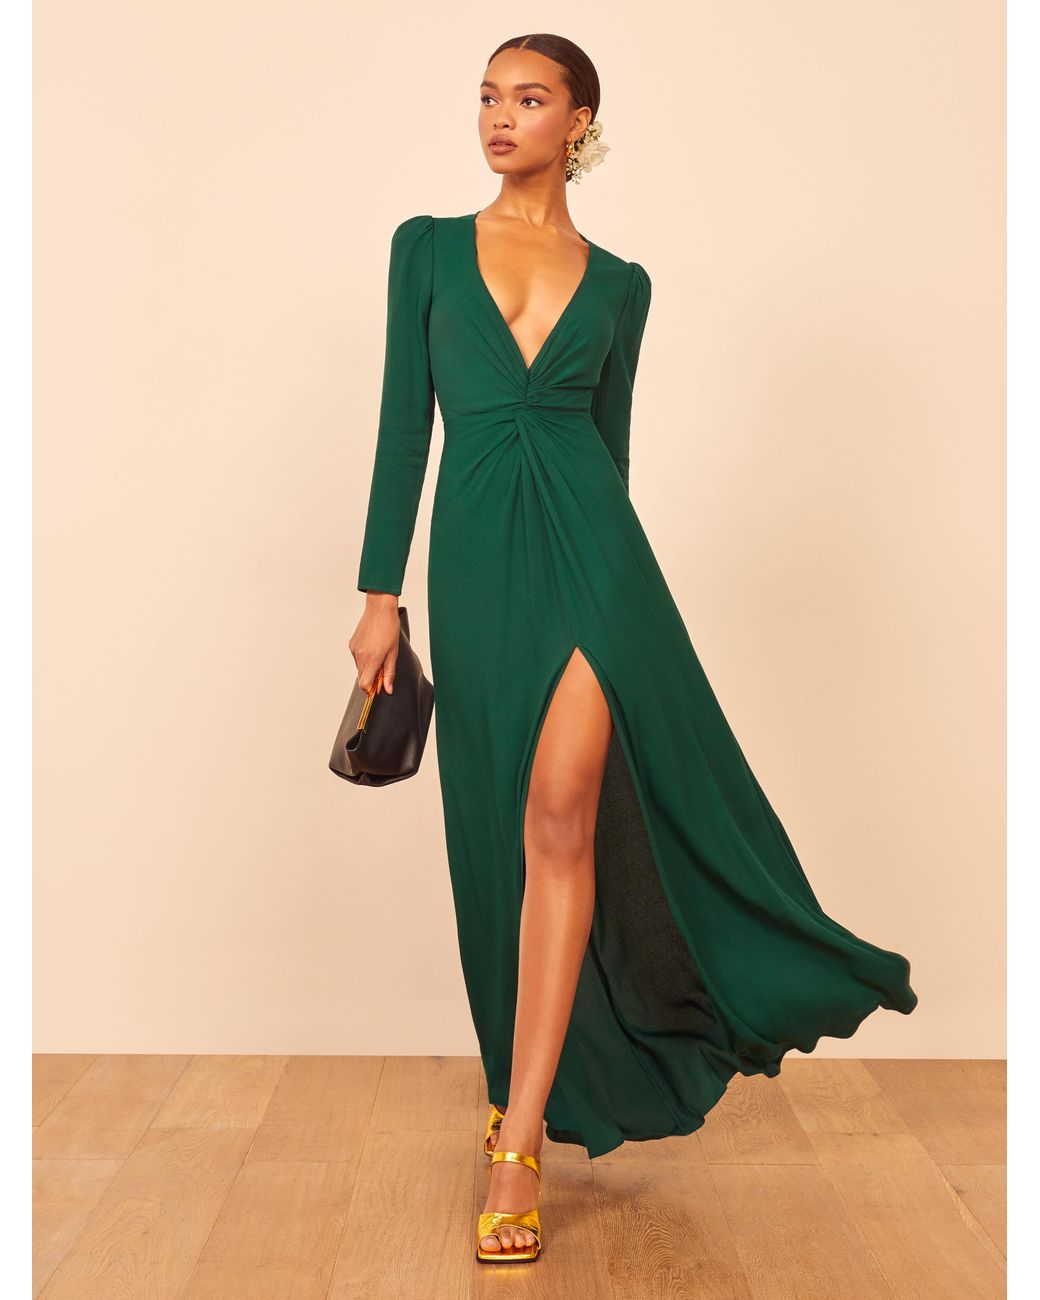 Reformation Gatsby Dress in Green